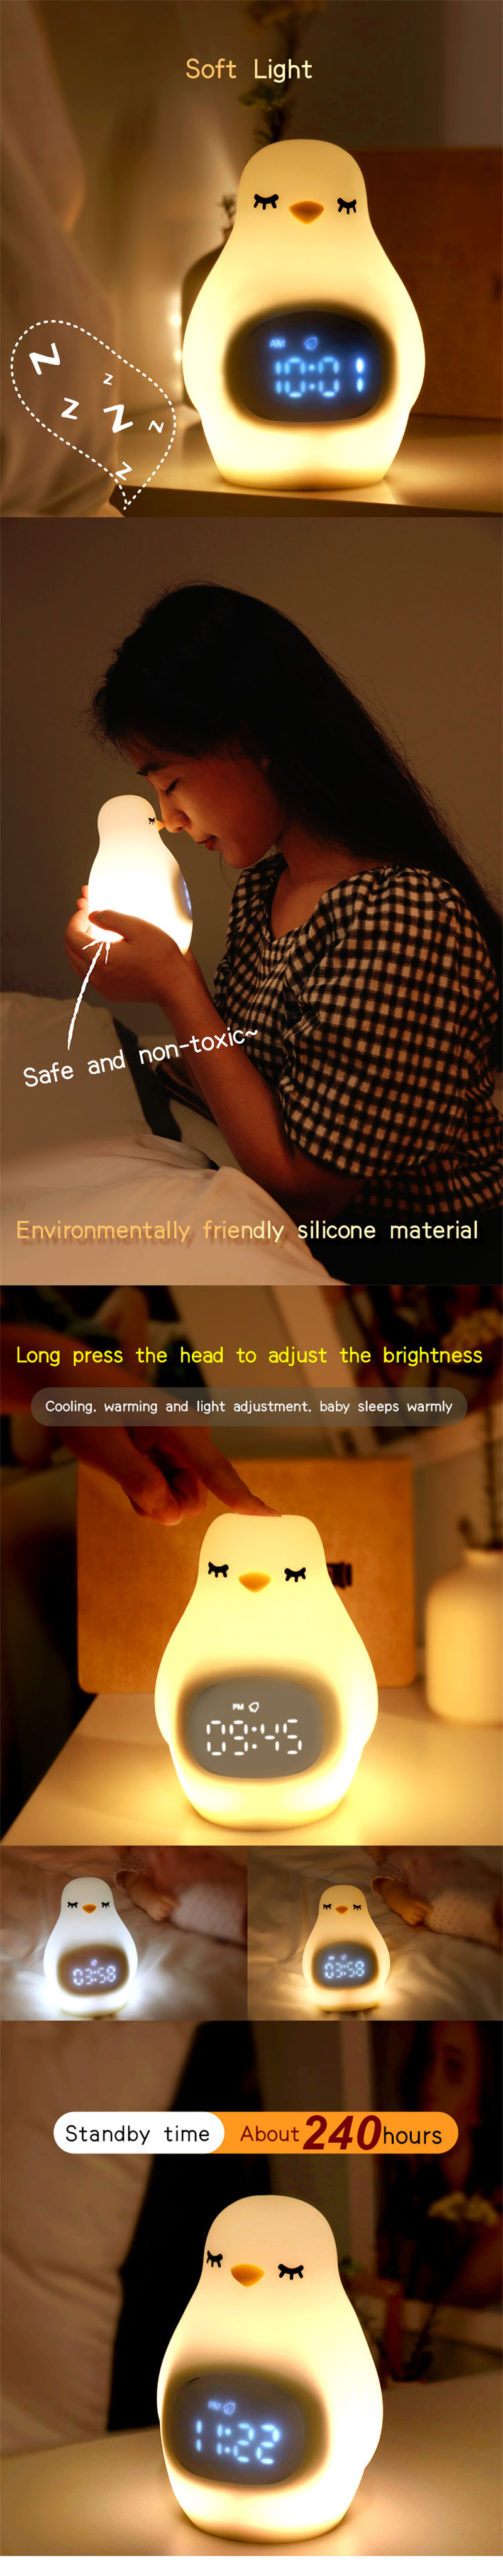 Alarm Clock Night Light | Innovative Product Baby Cute penguin LED Sunrise Digital Alarm Clock with Night Light Sleep Trainer